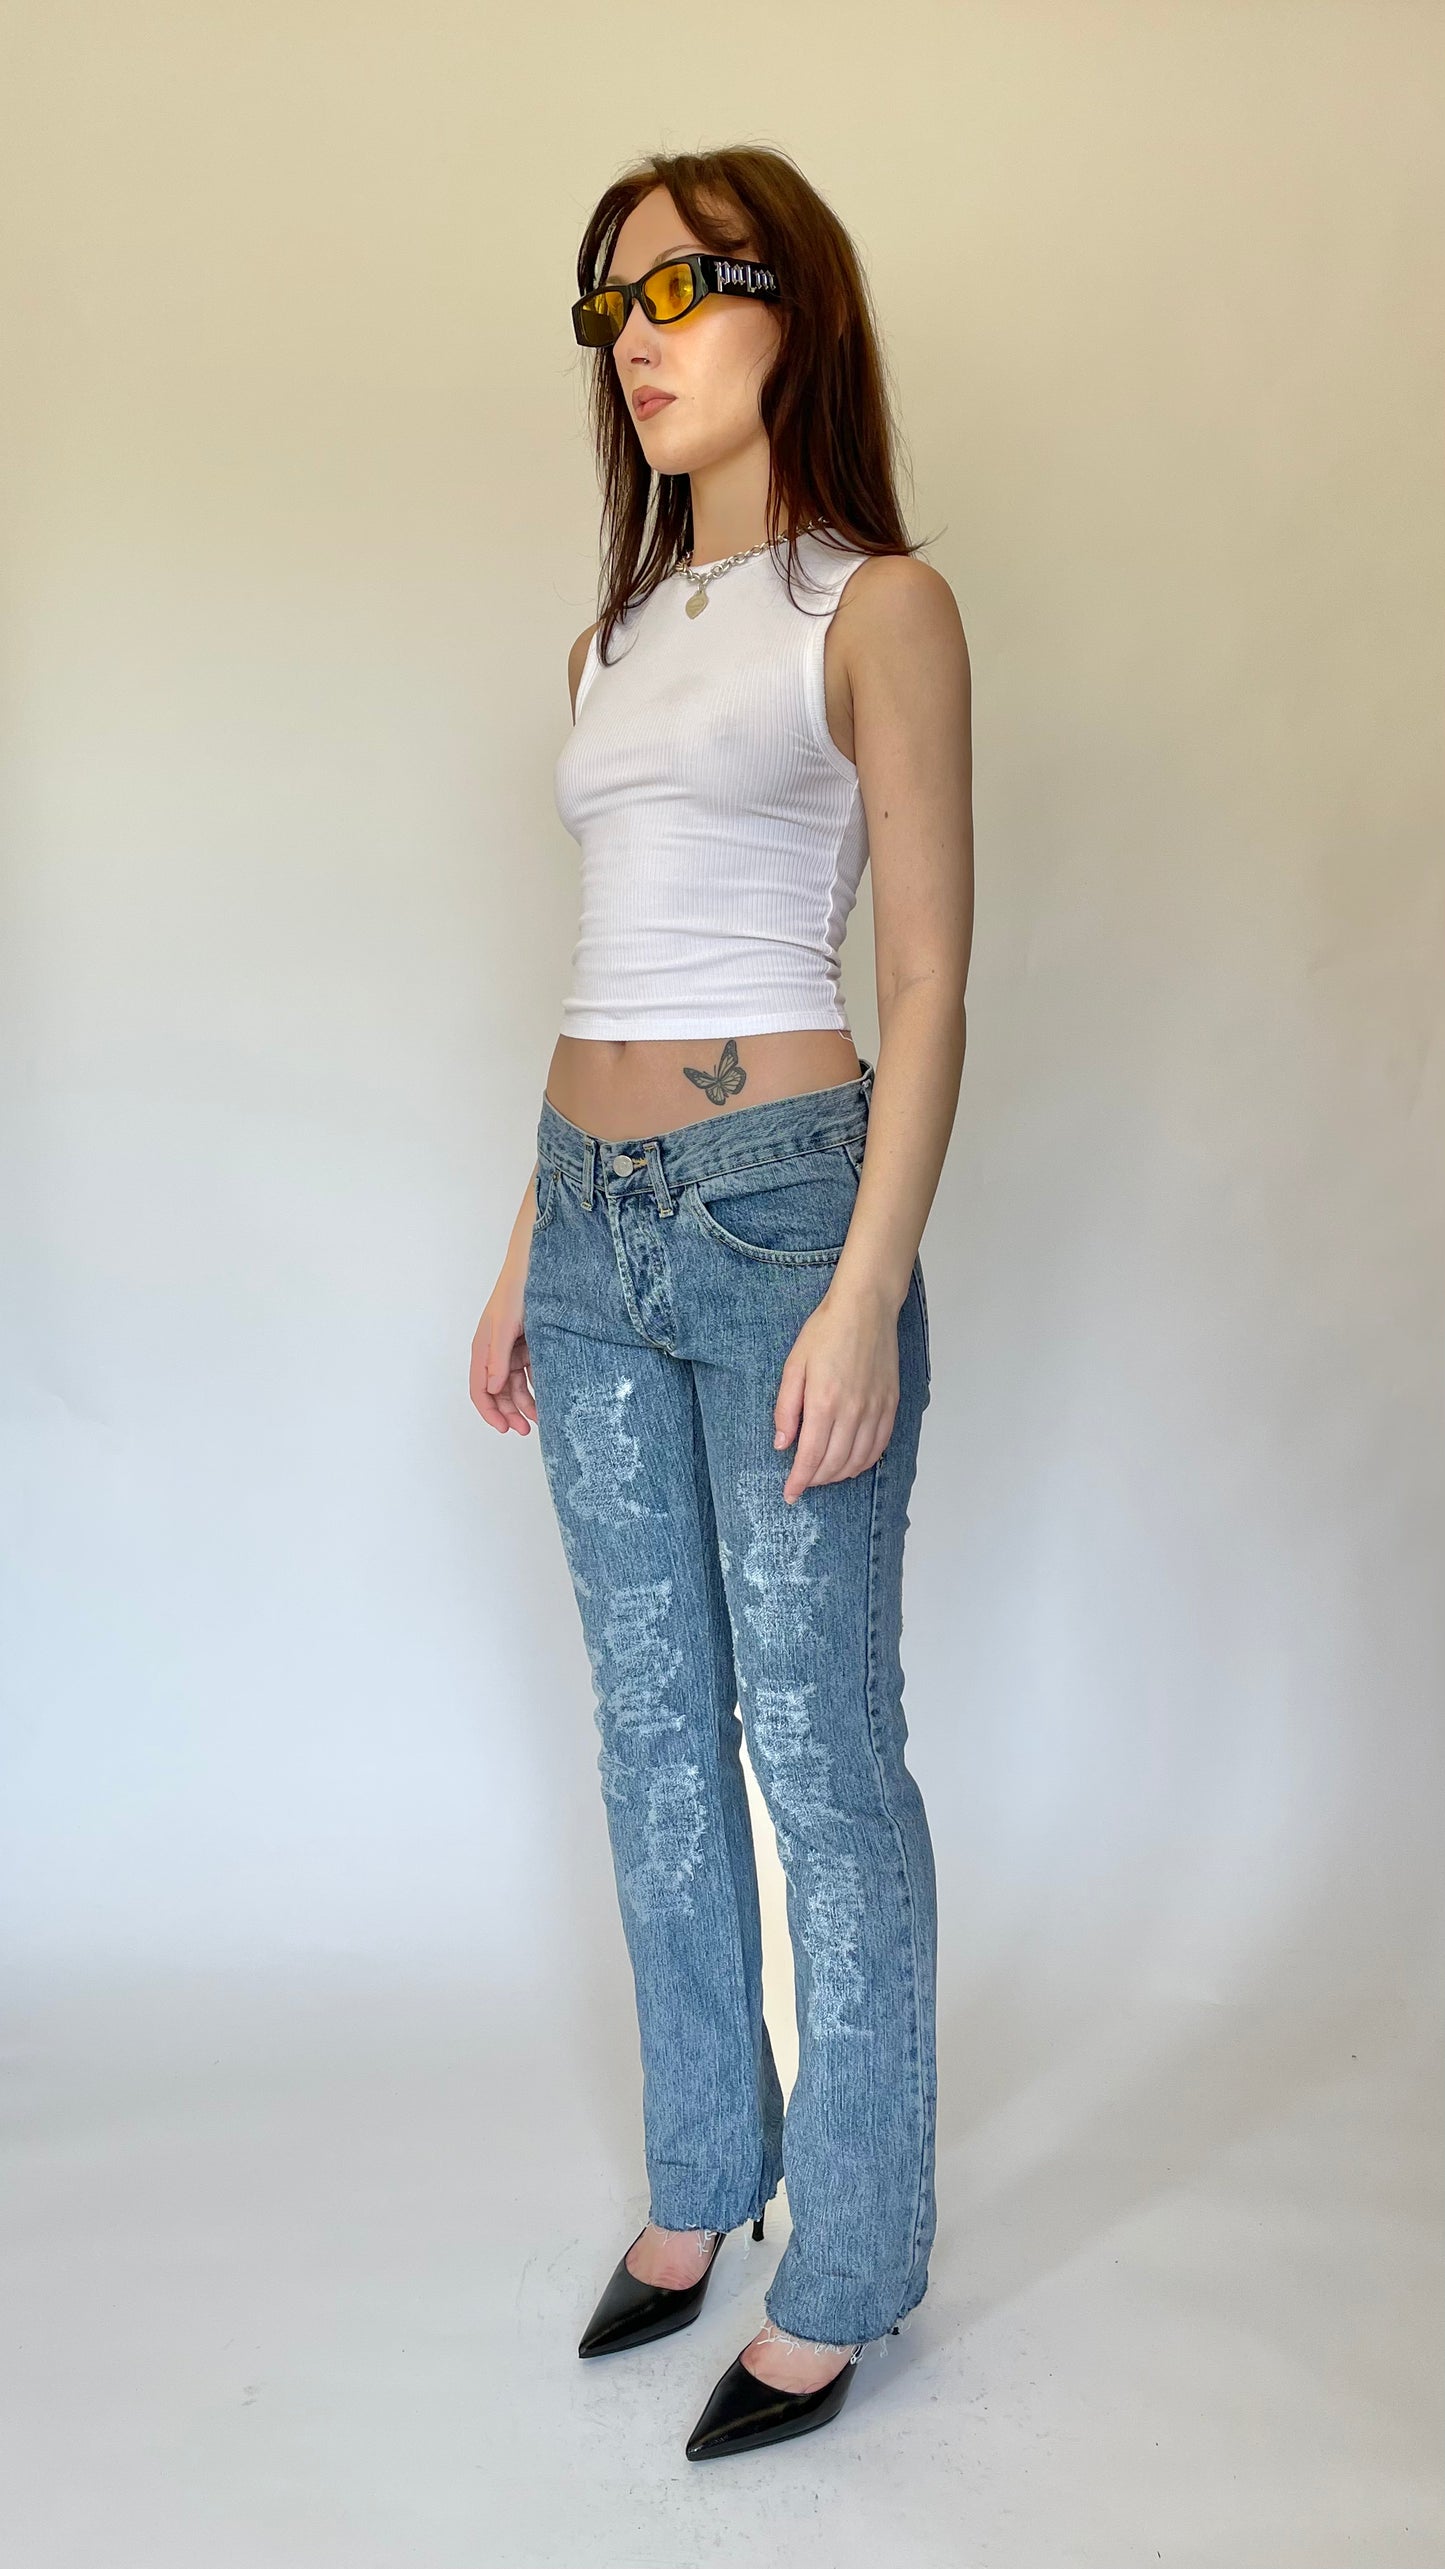 Dolce & Gabbana jeans (size 30)